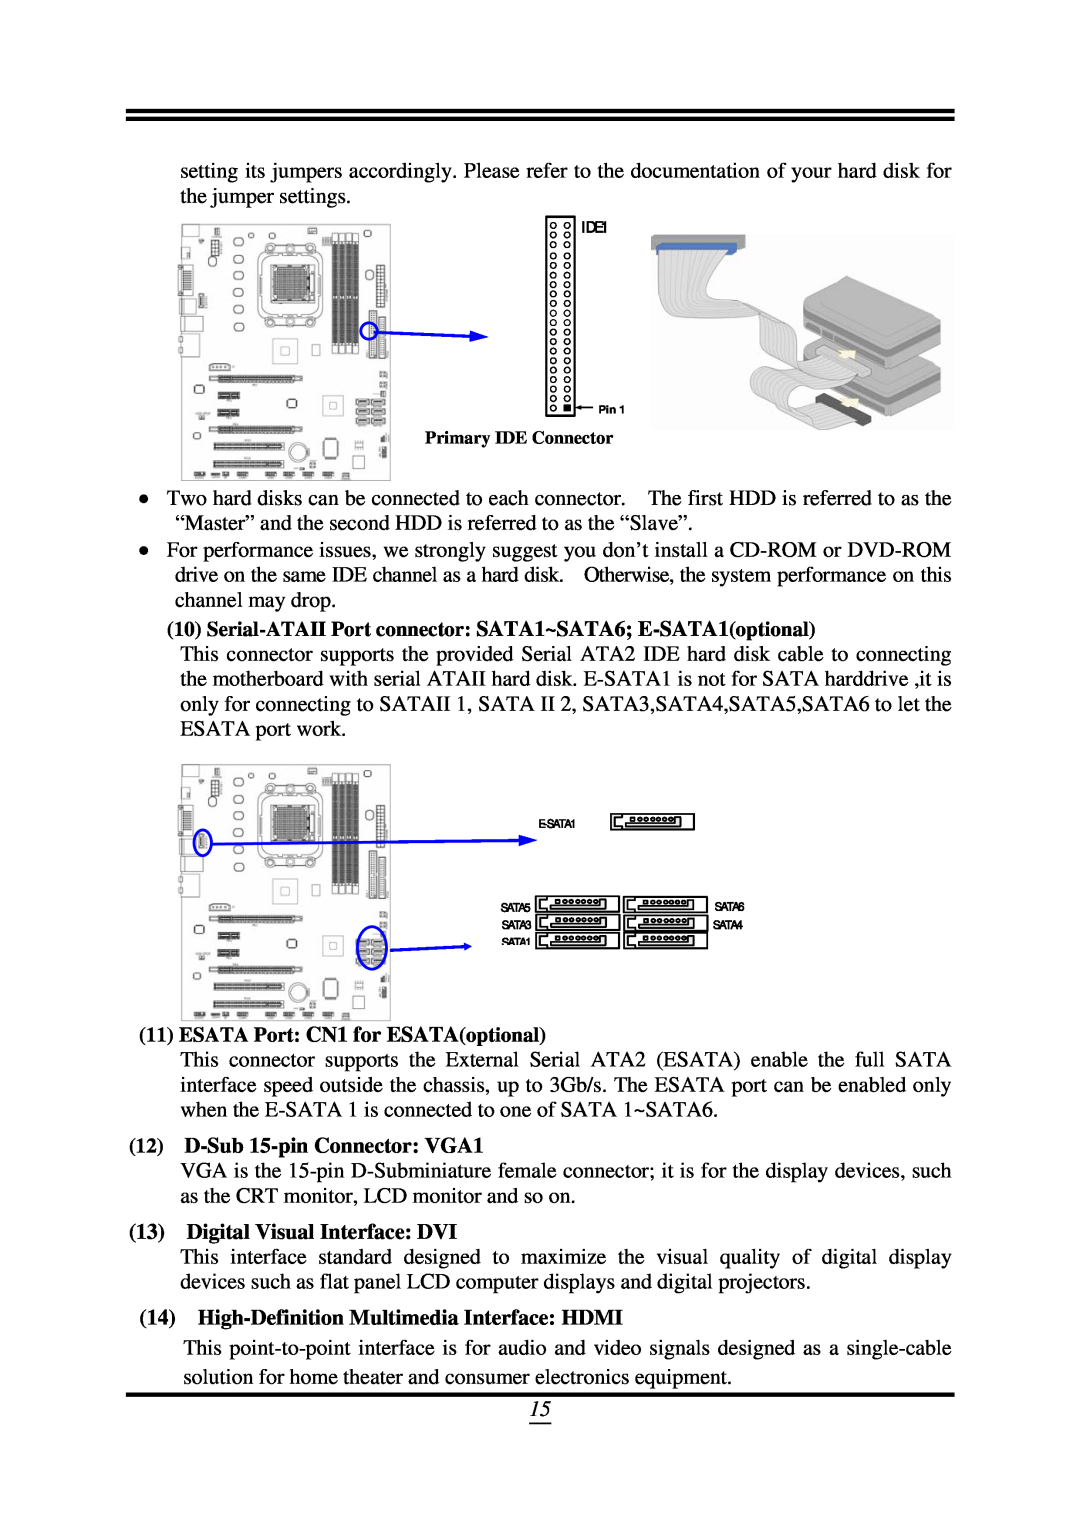 AMD 790GX, SB750 D-Sub 15-pin Connector VGA1, Digital Visual Interface DVI, High-Definition Multimedia Interface HDMI 